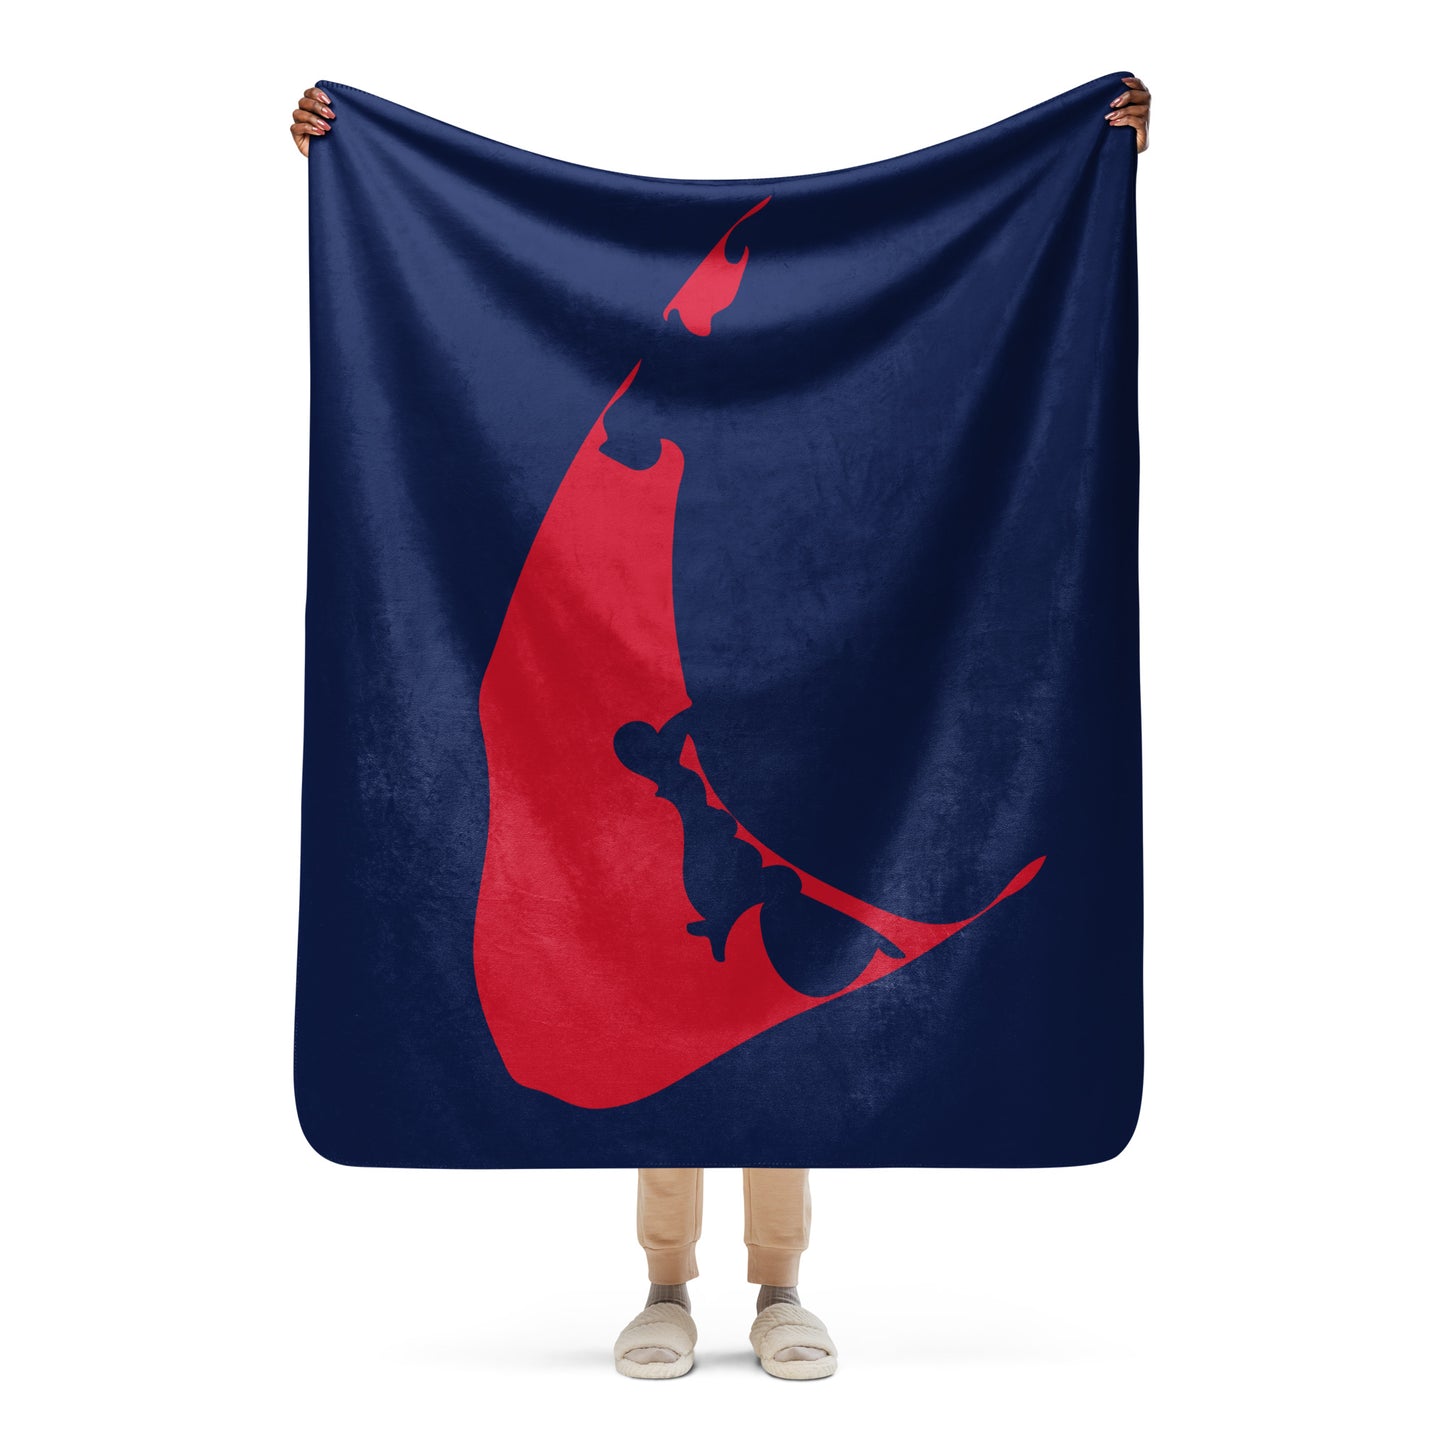 Nantucket Sherpa blanket - Red on Navy